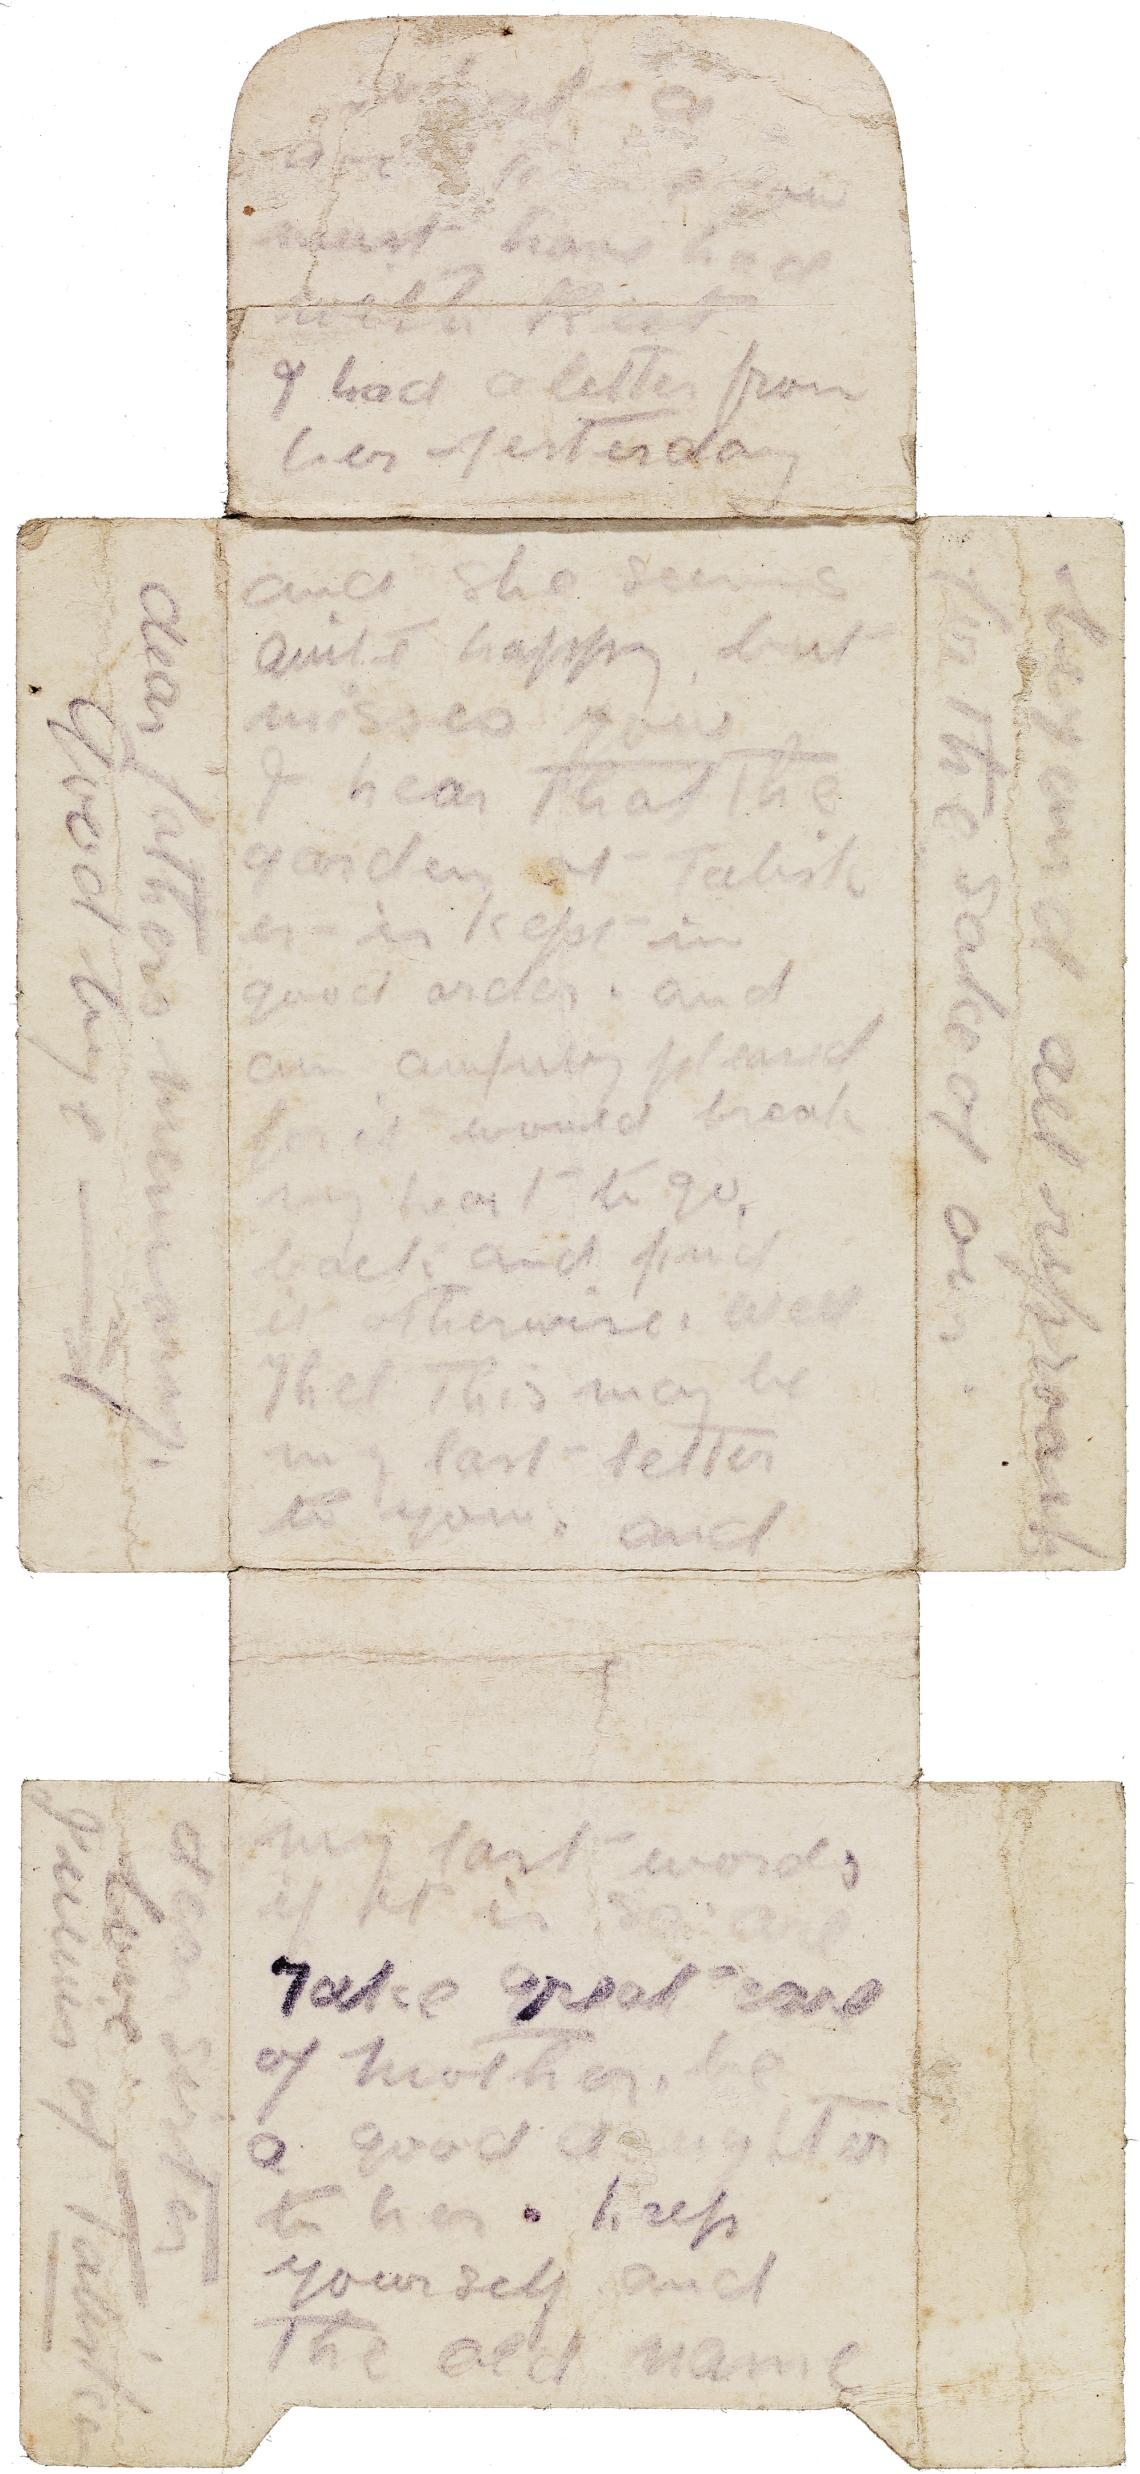 Letter from Gallipoli written by JFW MacLeod on cigarette packet back June 1915